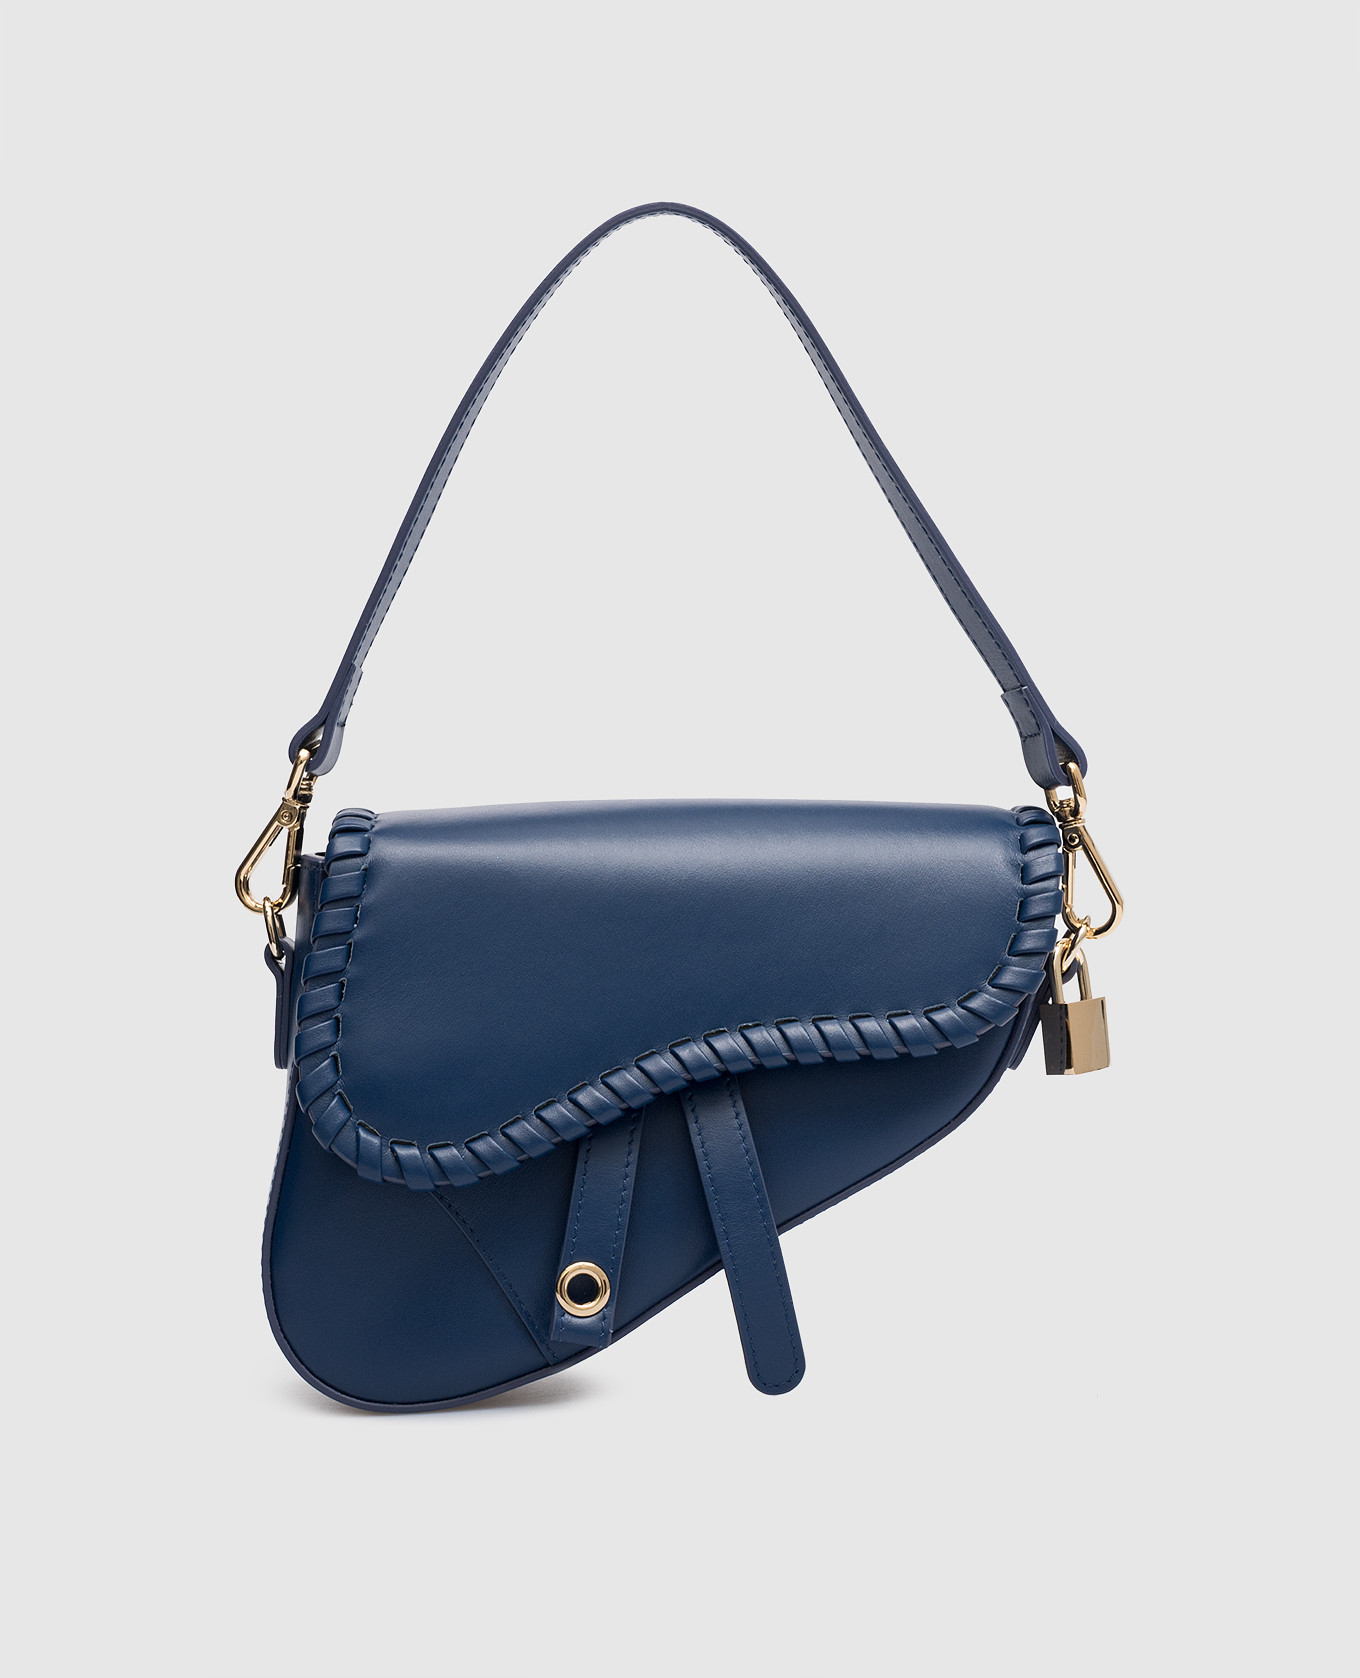 Blue leather saddle bag